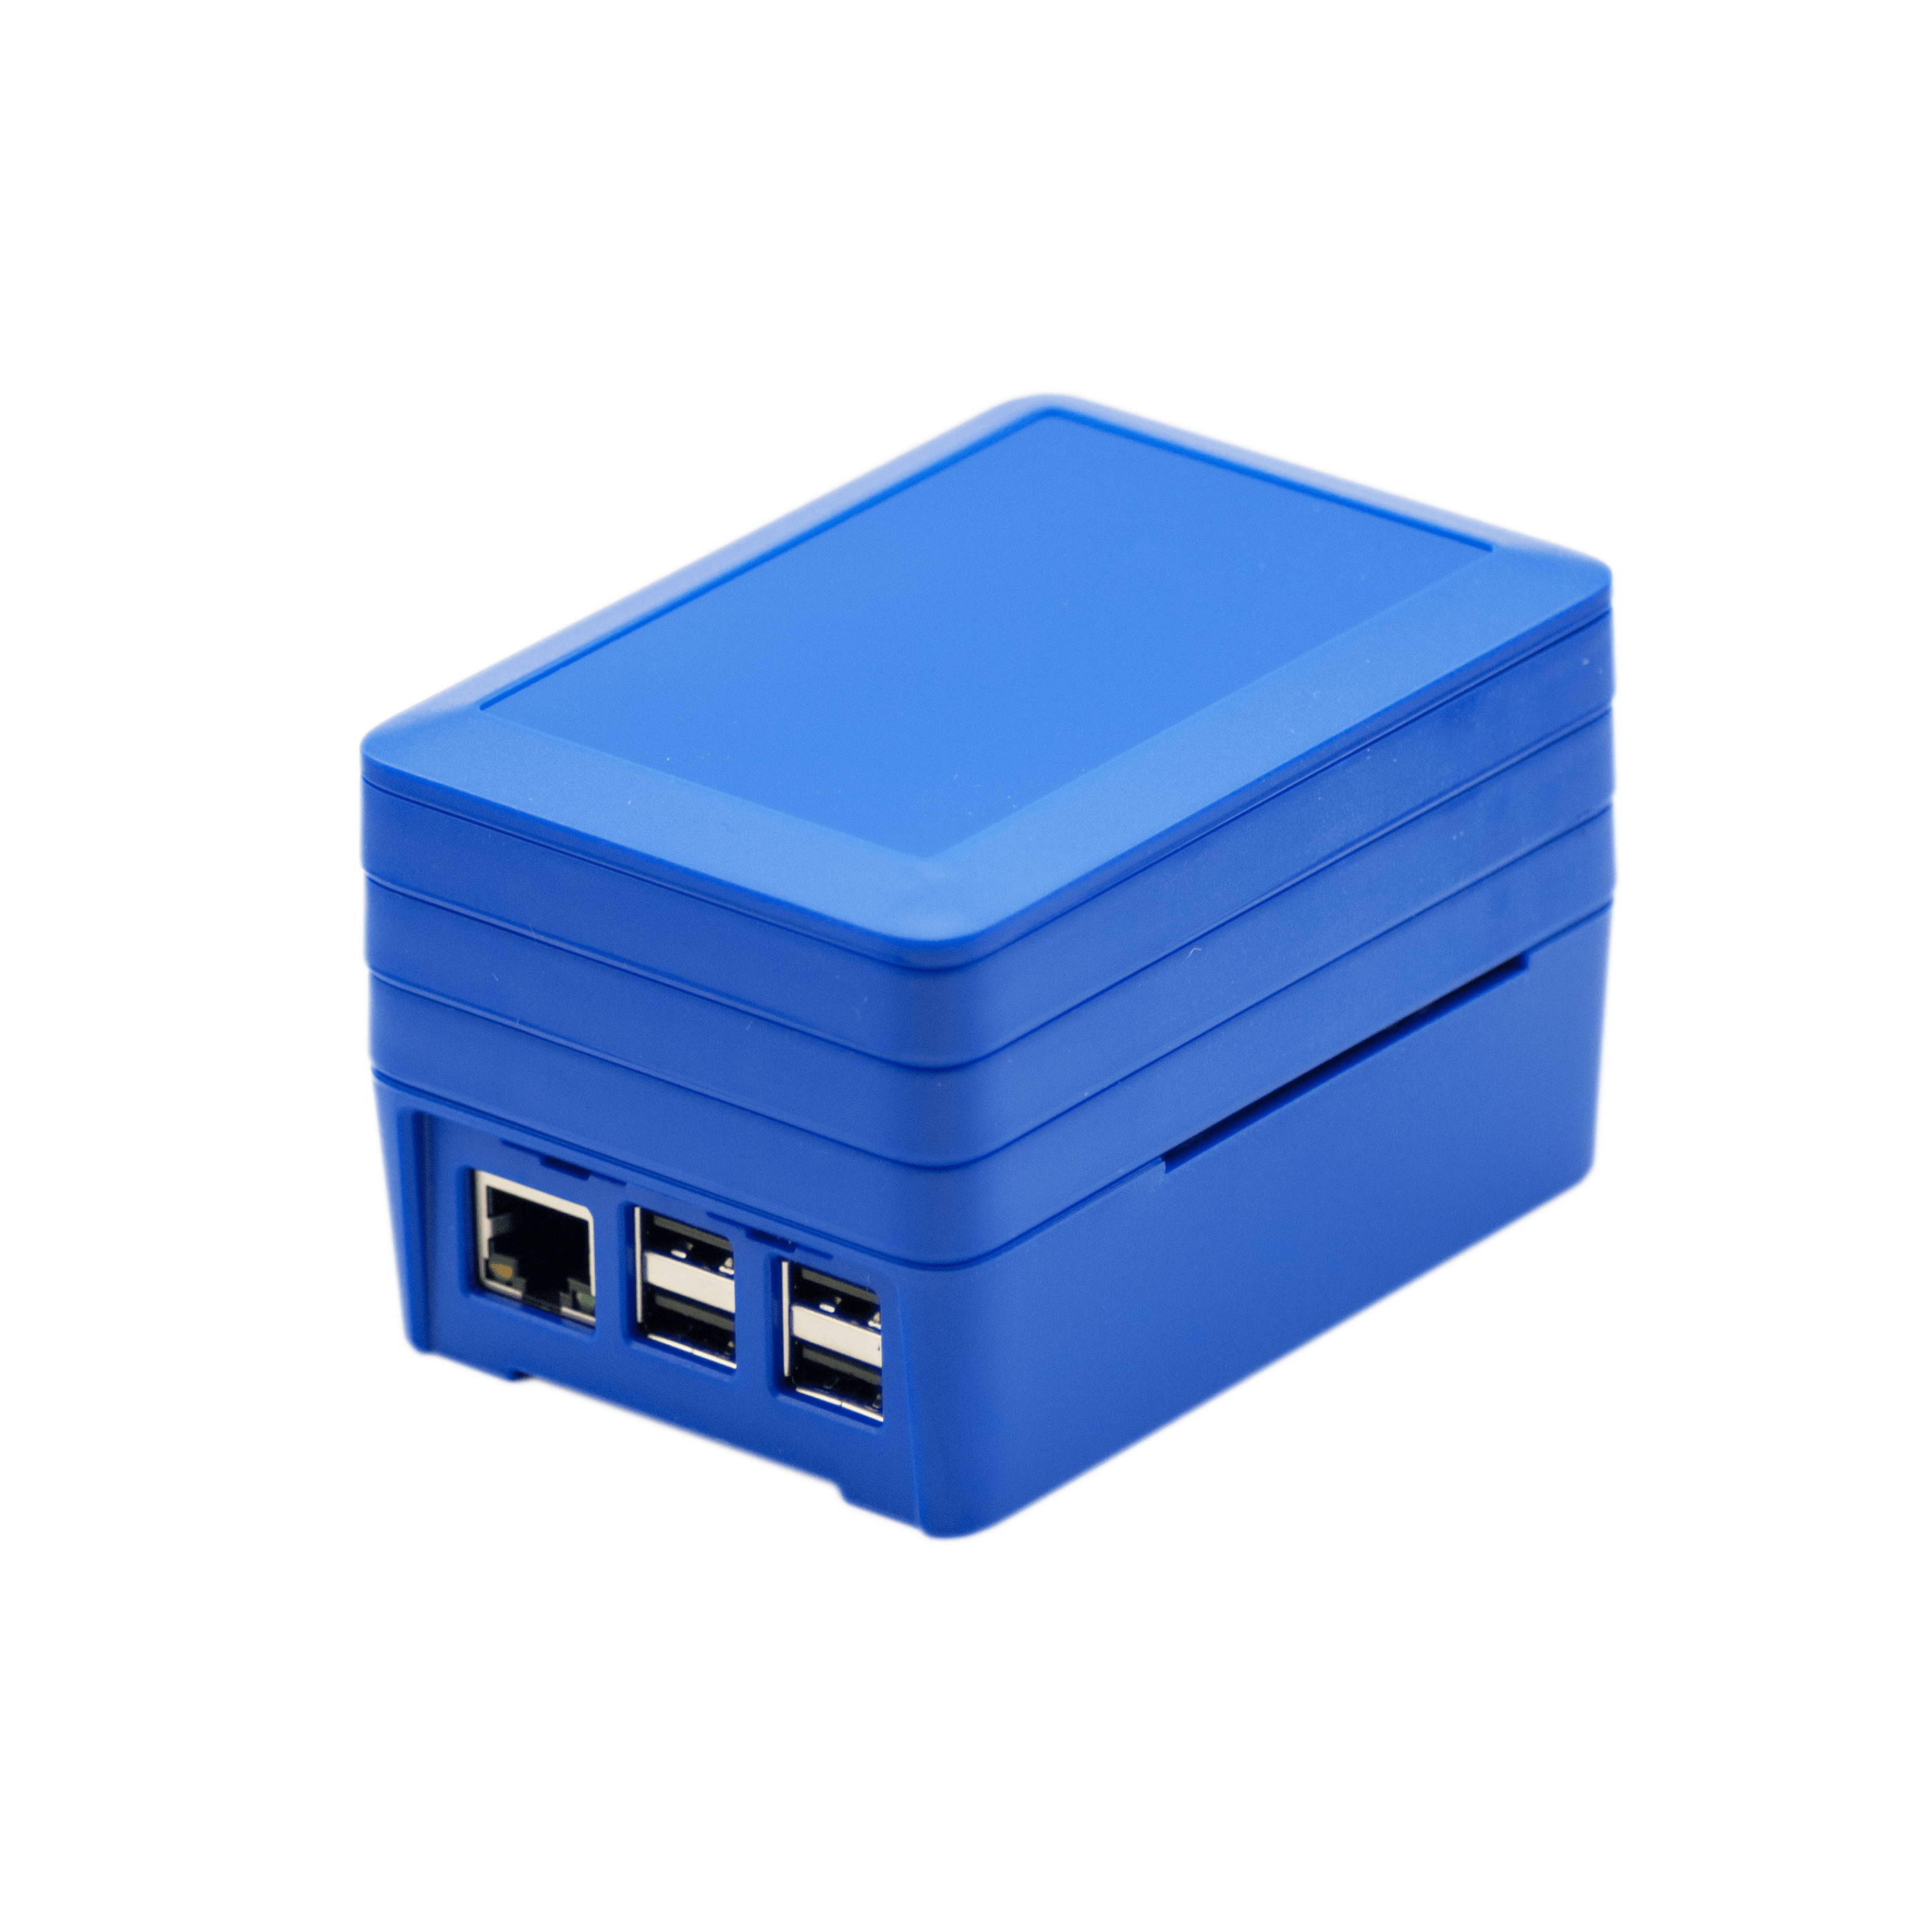 10mm Spacer for Modular Raspberry Pi Case - Blue - The Pi Hut